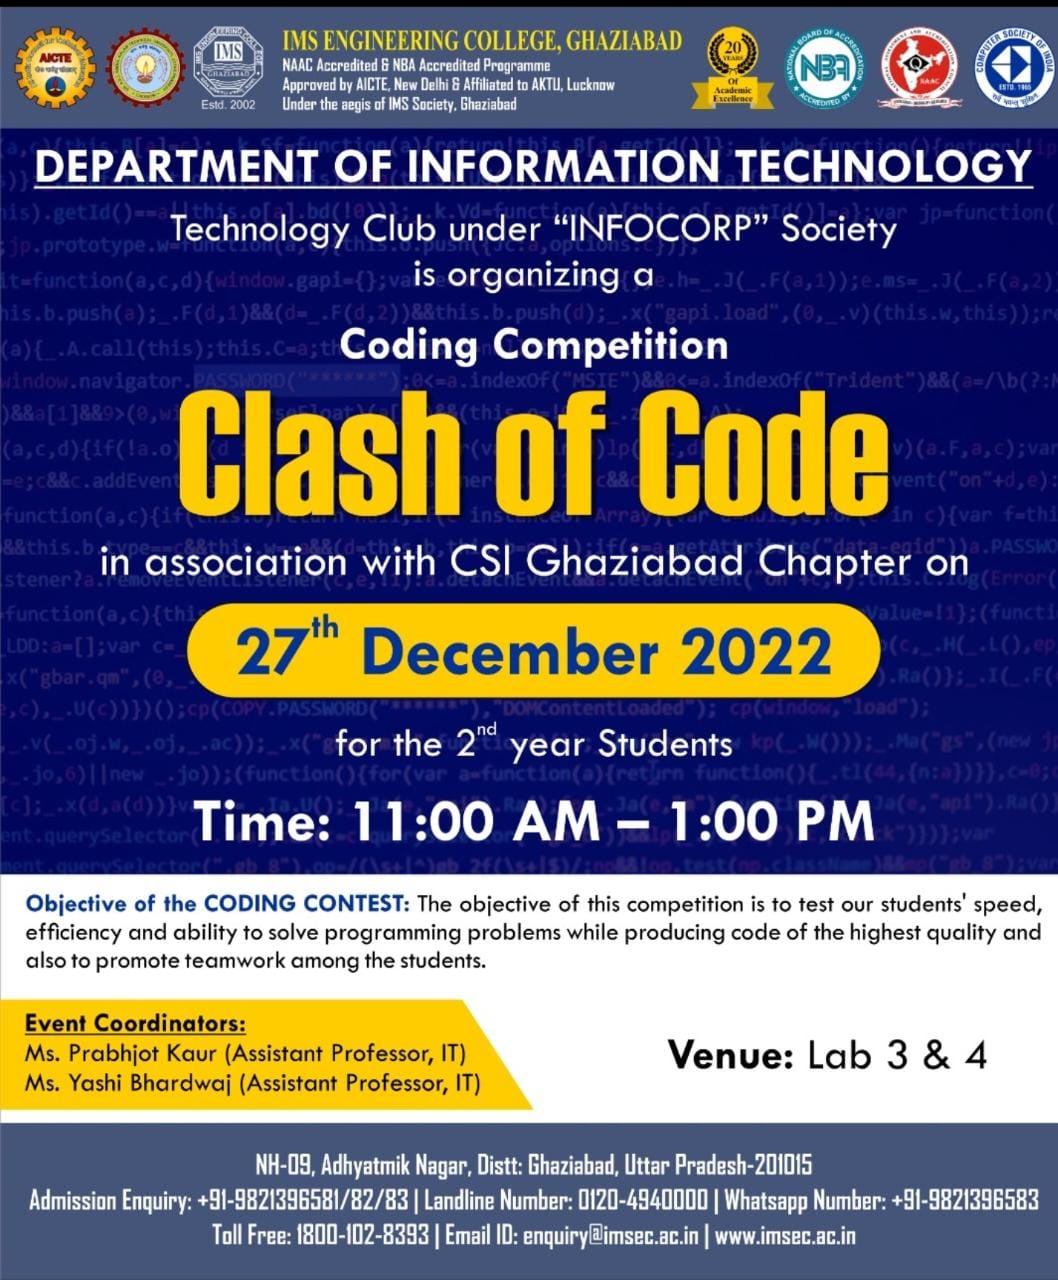 Clash of Code - A coding contest